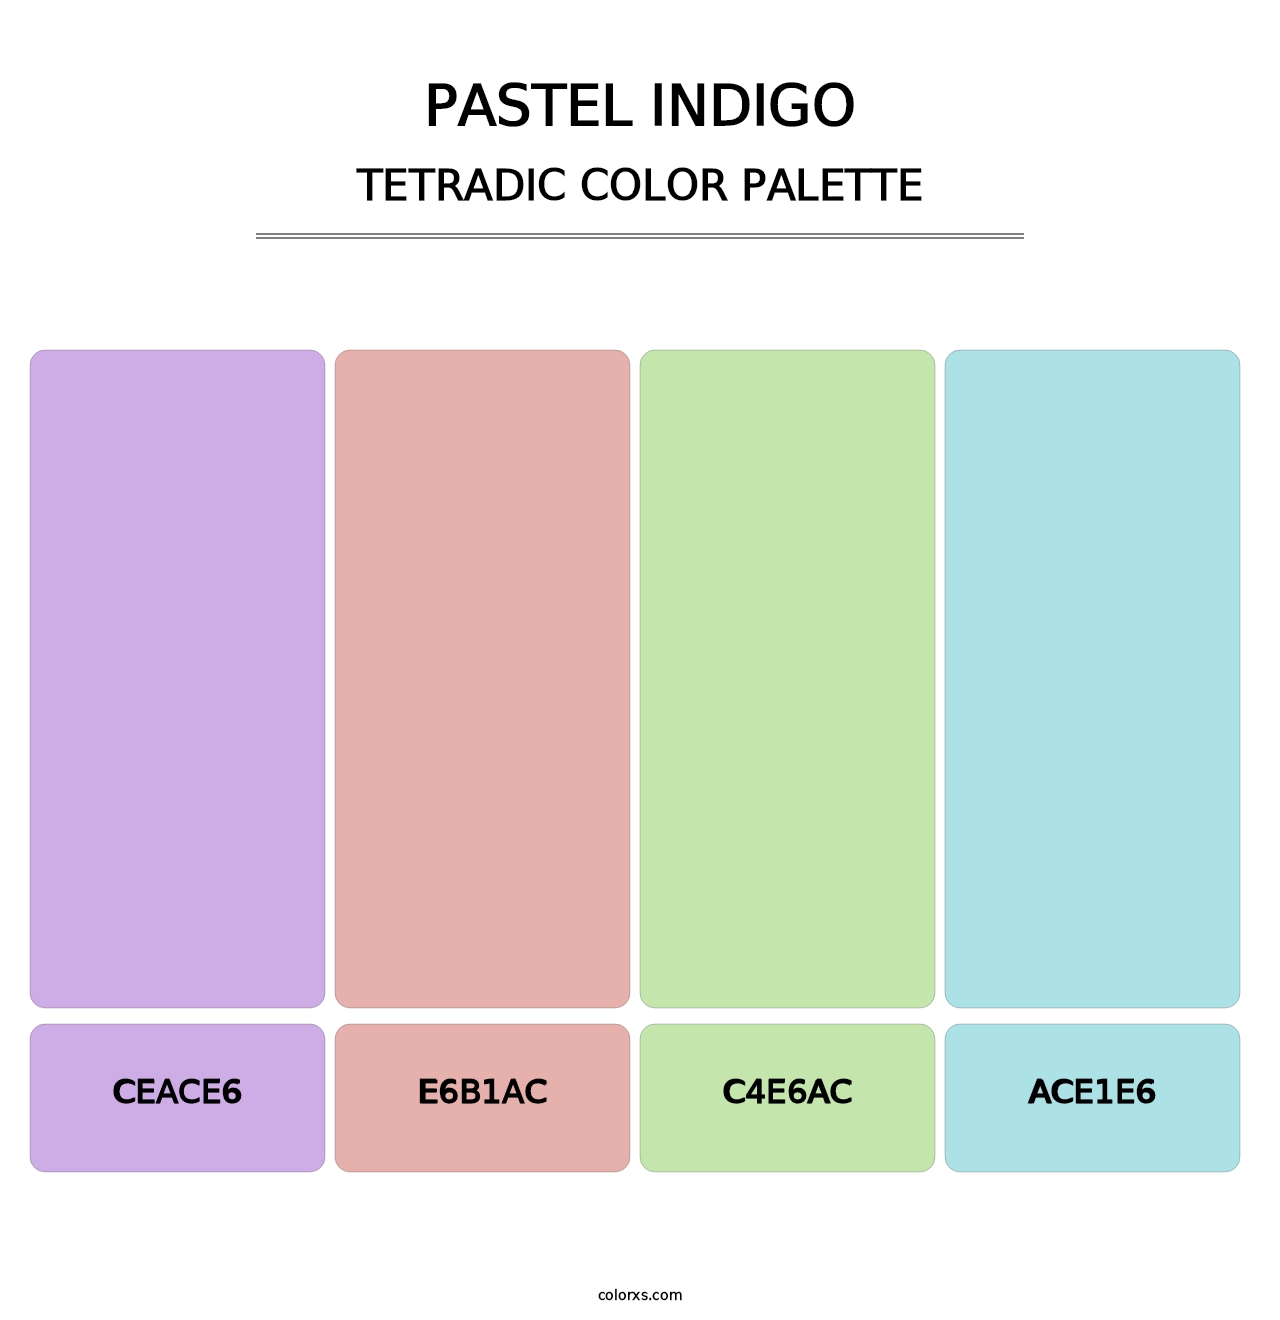 Pastel Indigo - Tetradic Color Palette